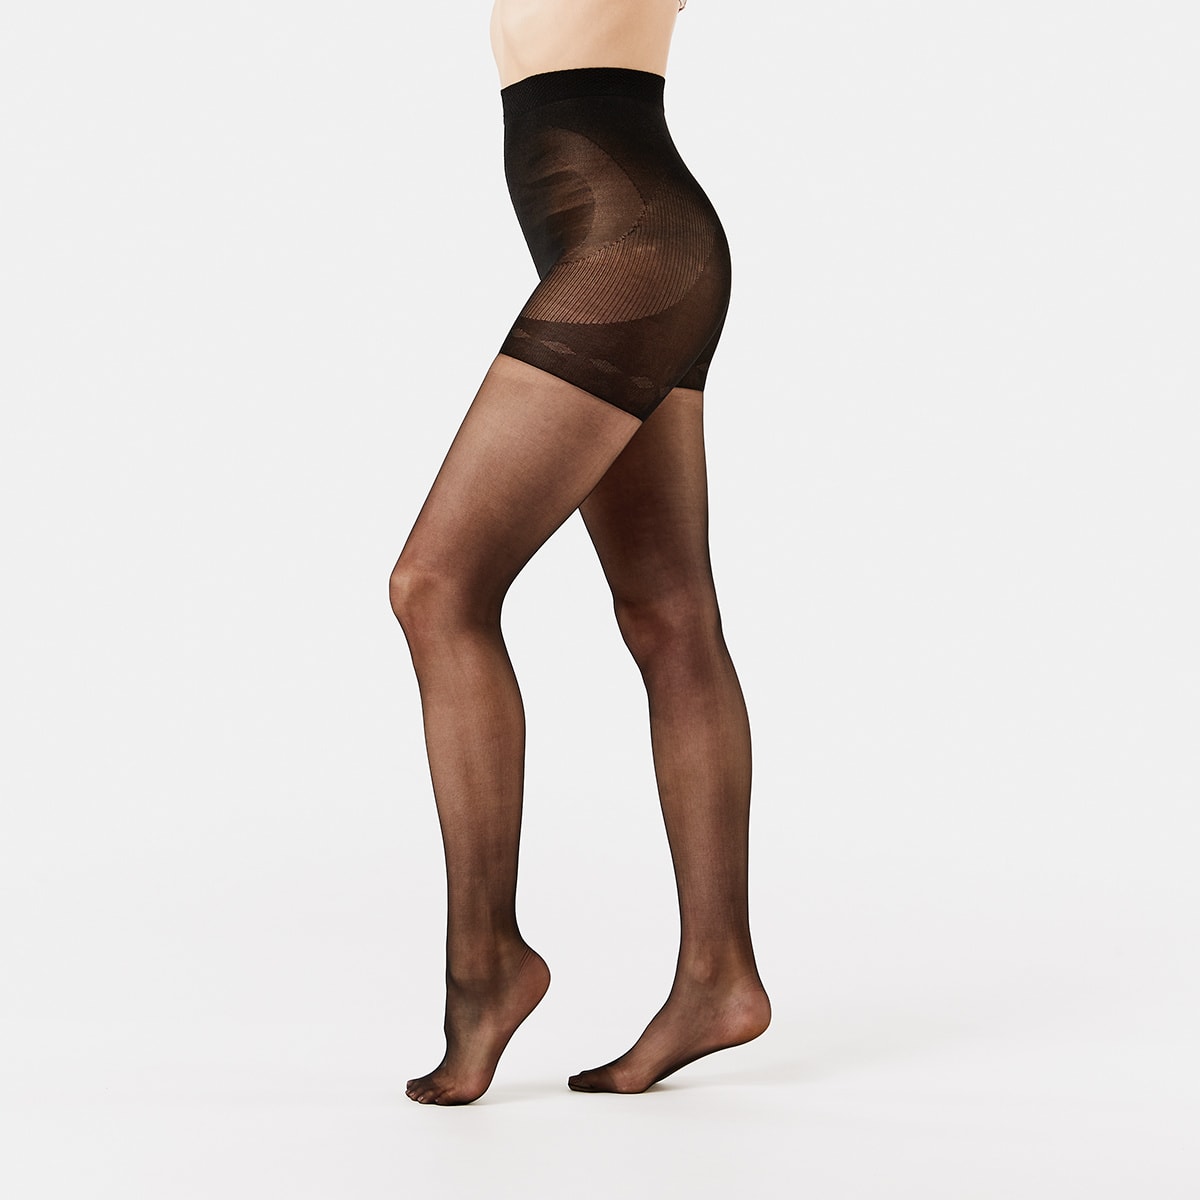 Kmart  Body Shaping Pantyhose - PriceGrabber